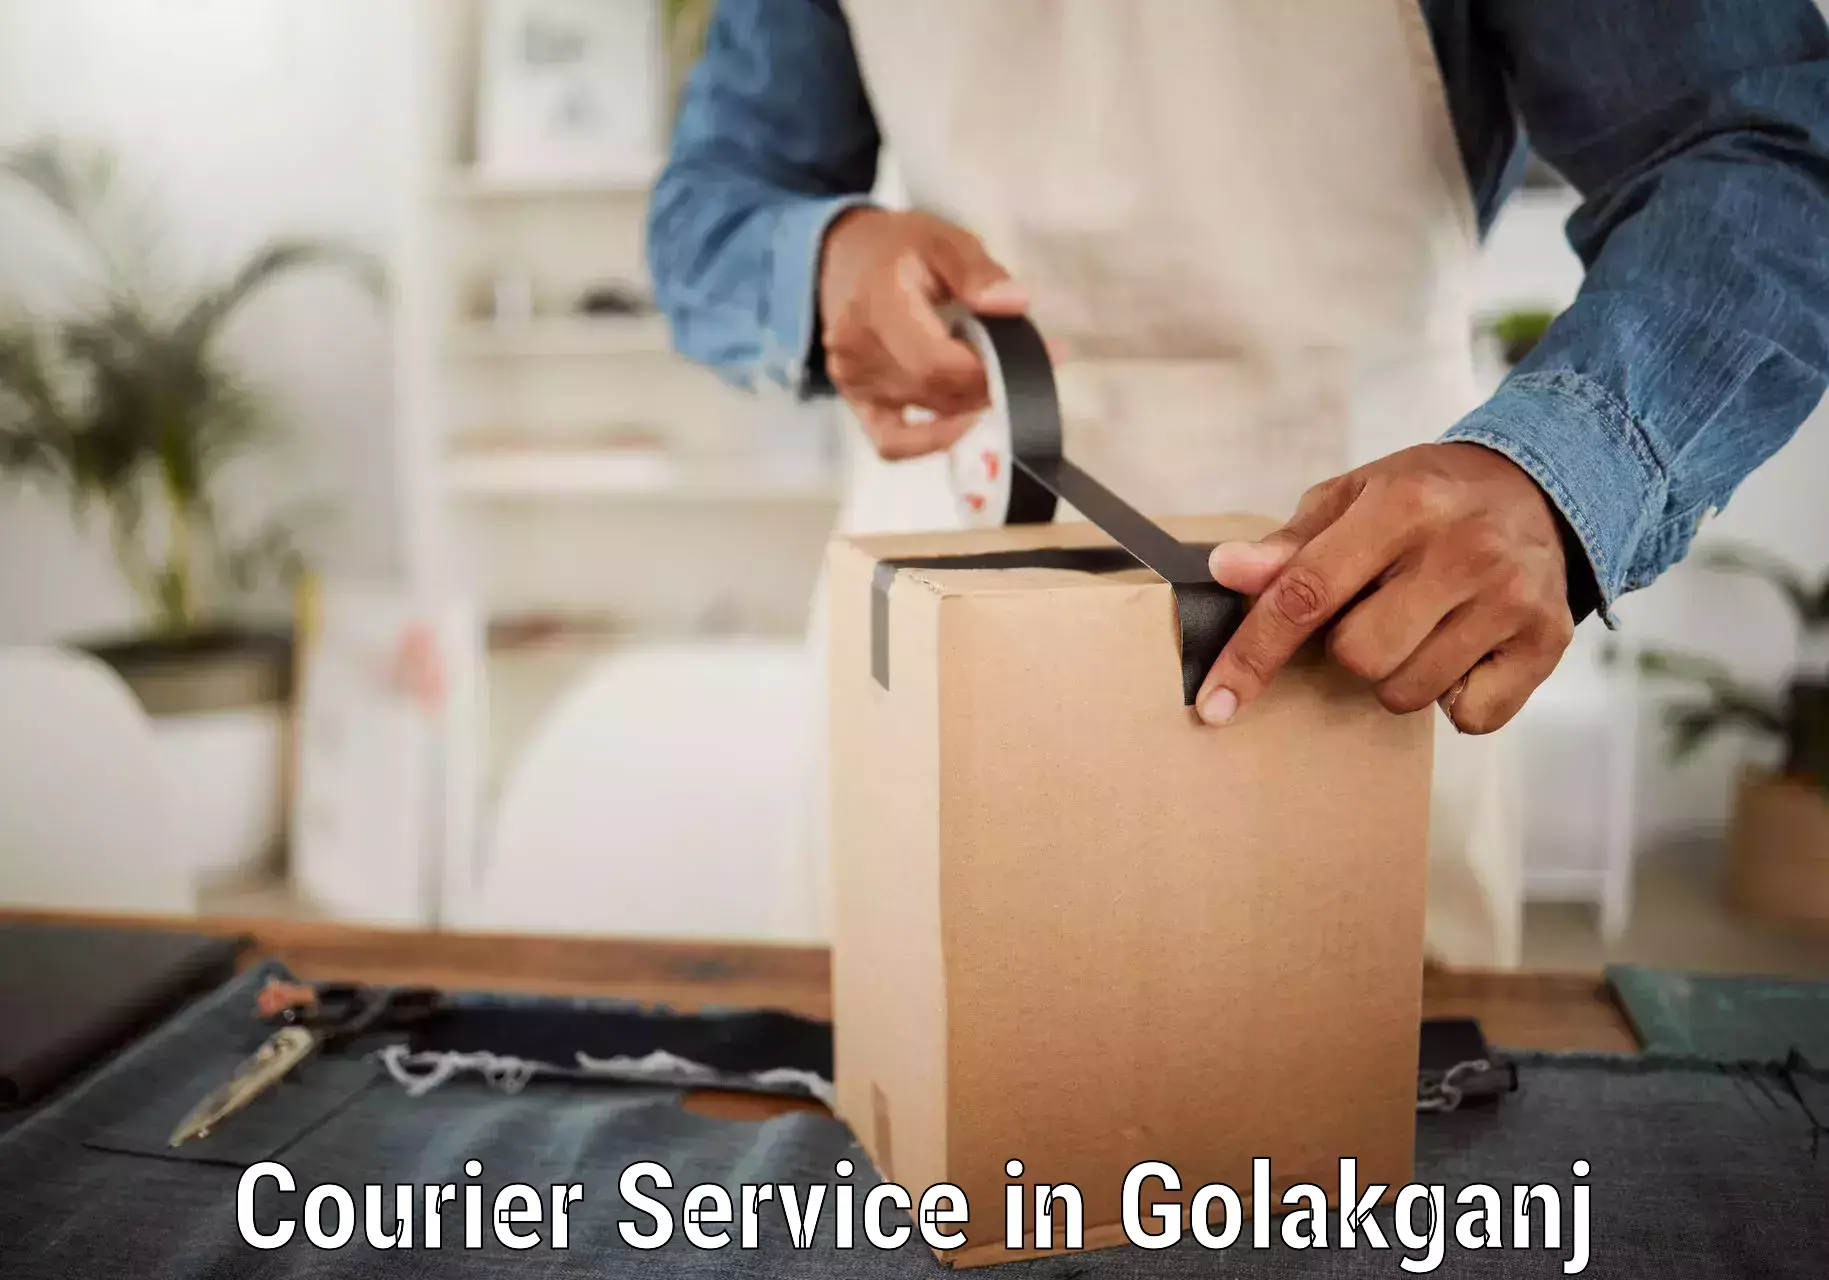 Courier service efficiency in Golakganj